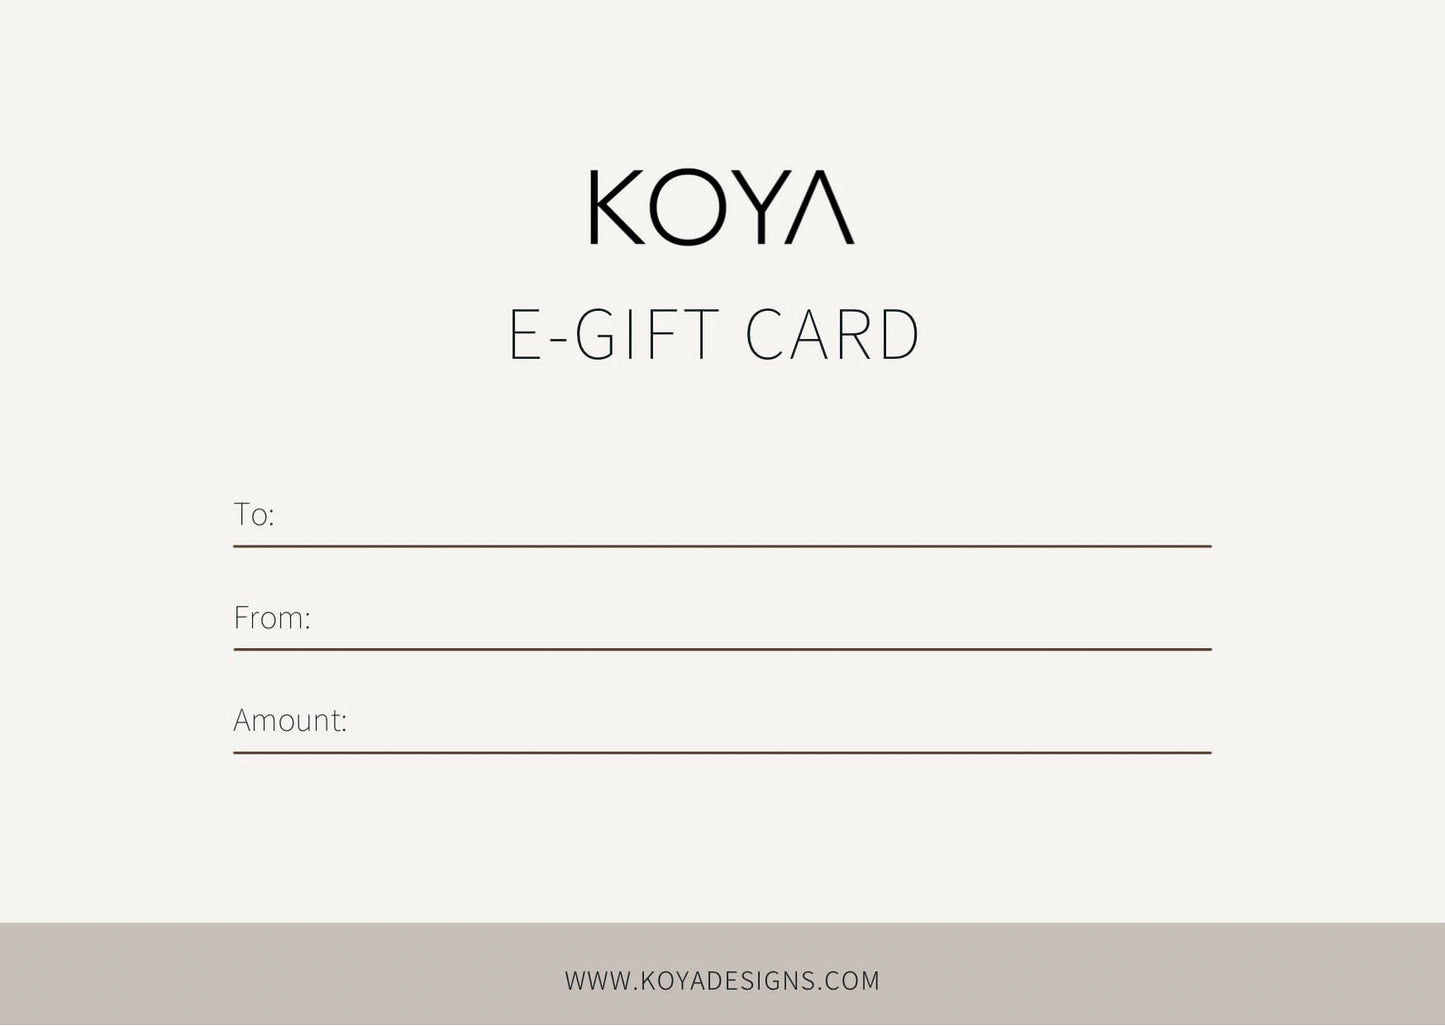 KOYA Designs Gift Card